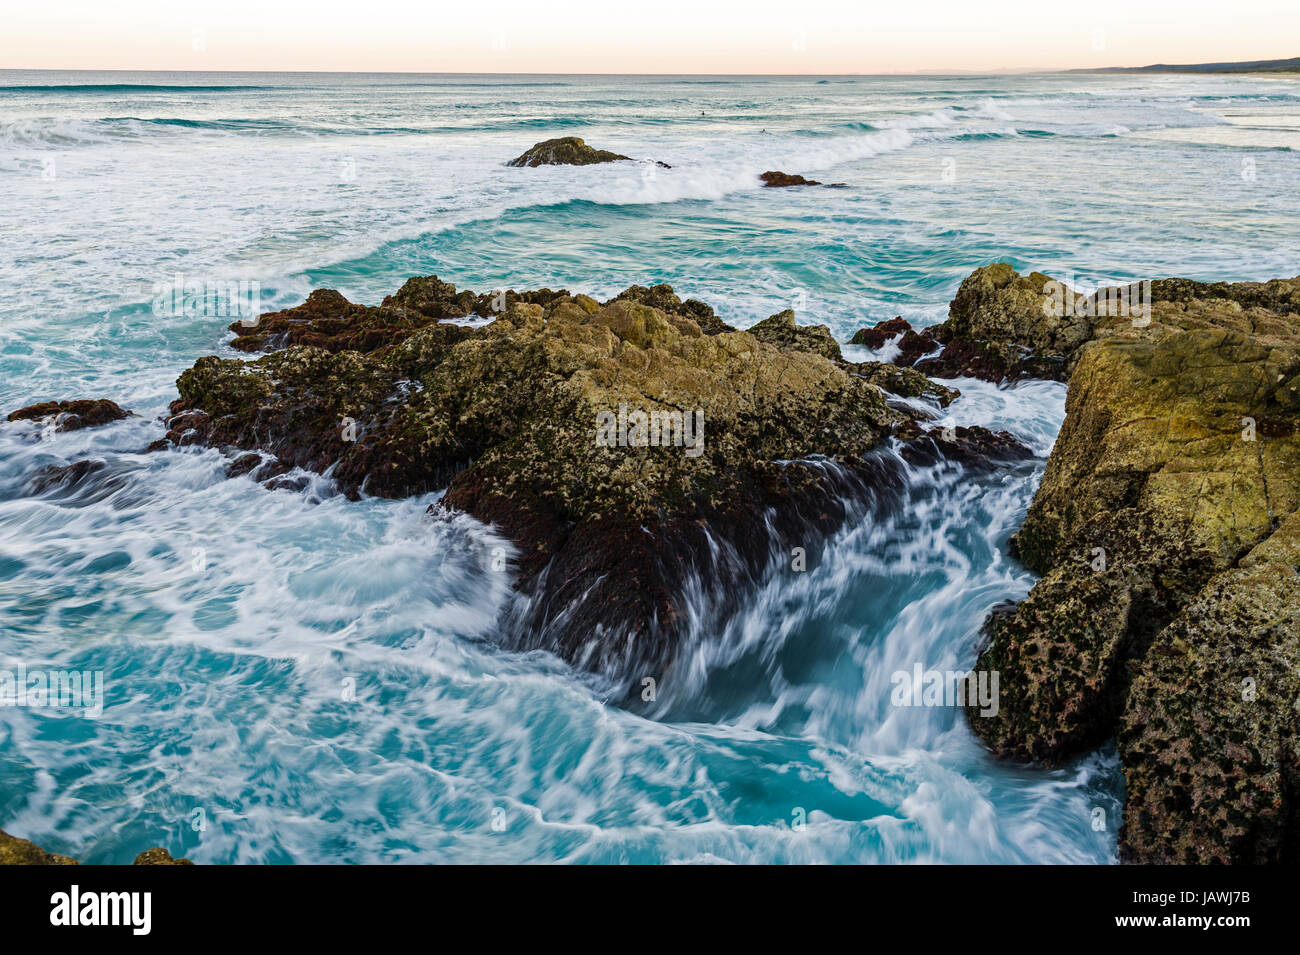 Waves smash against jagged rocks on a pristine coastline. Stock Photo